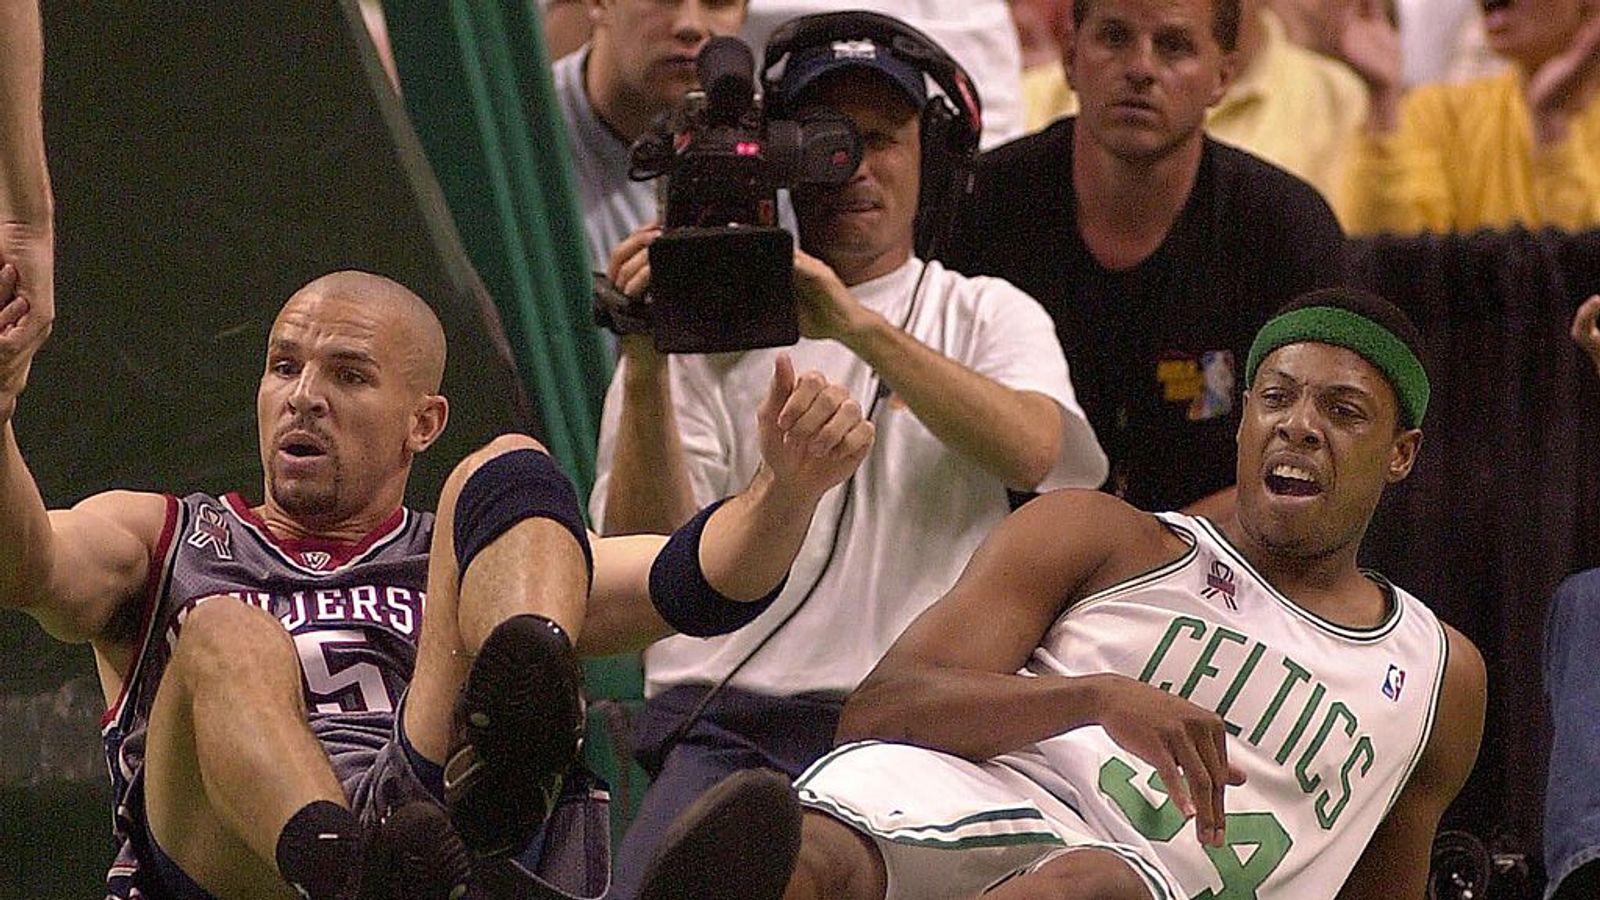 Paul Pierce and Antoine Walker on the Cover - Boston Celtics History